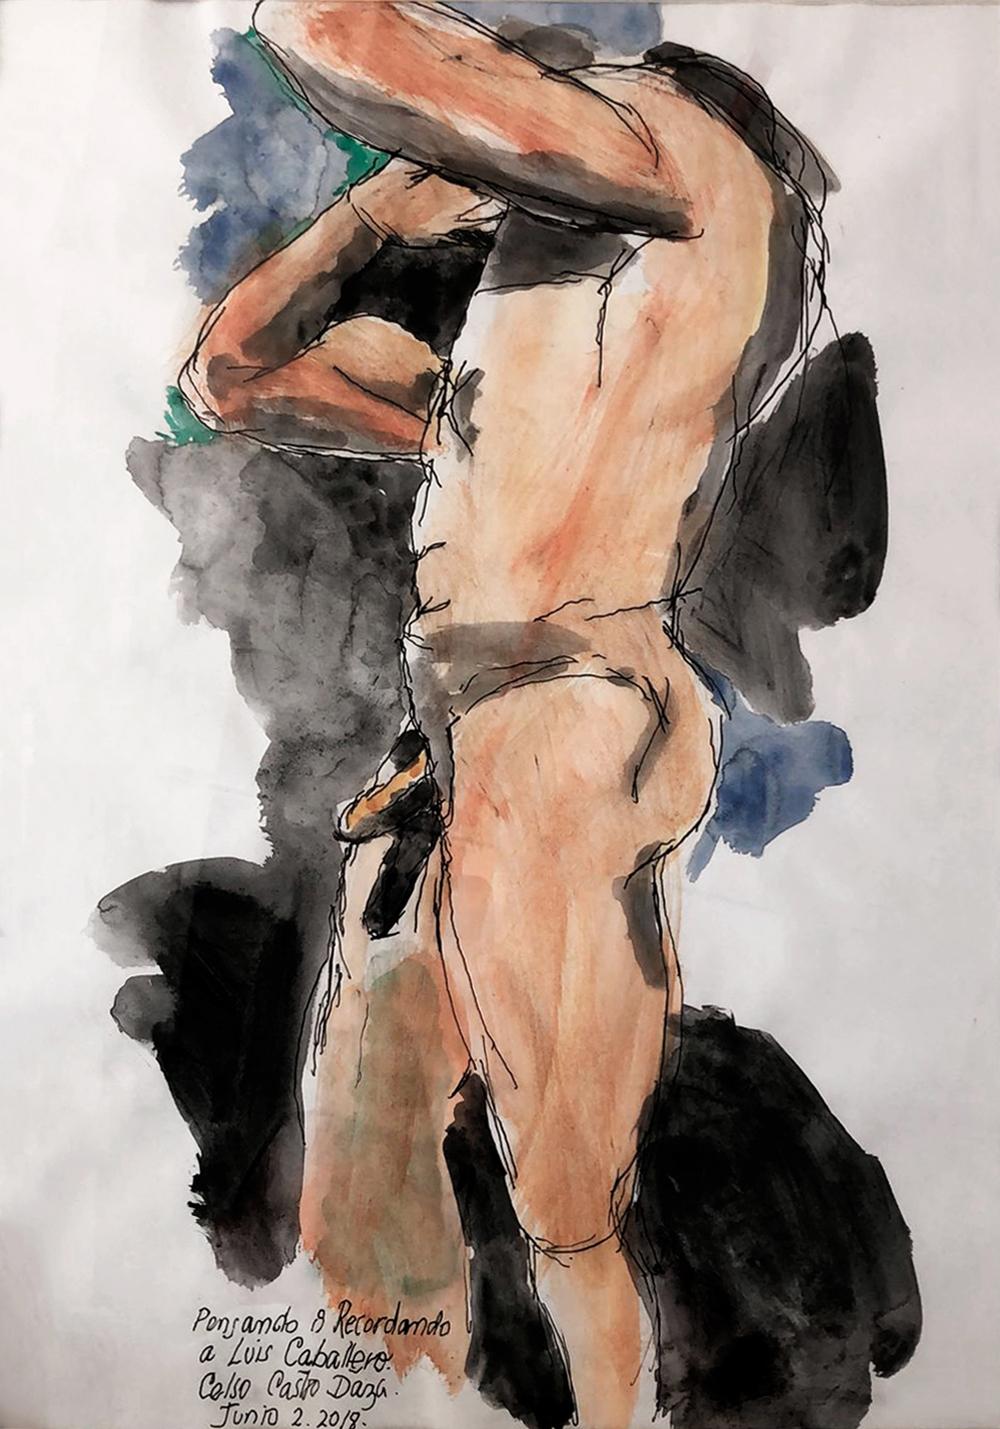 Celso José Castro Daza Figurative Art - Pensando & recordando a Luis Caballero, Nude Watercolor on paper